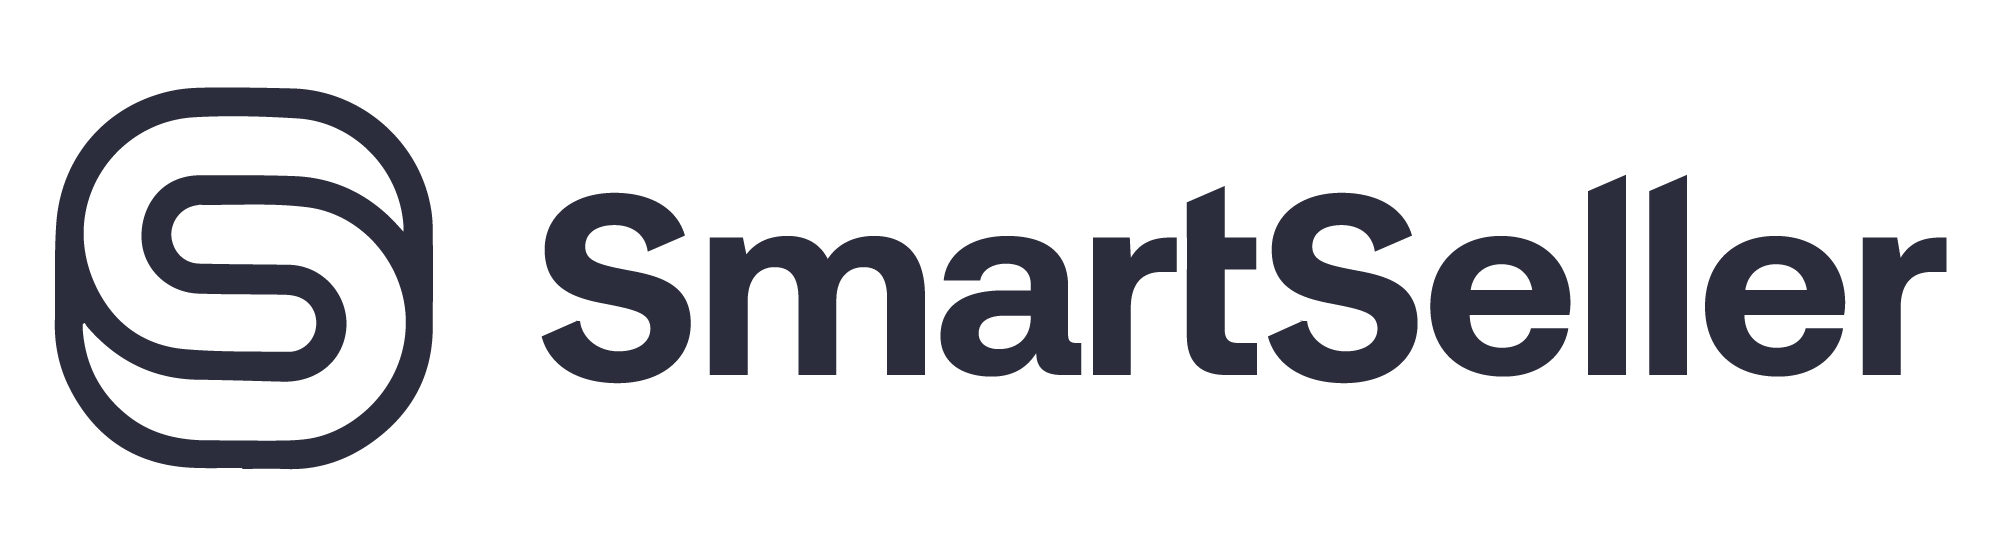 Smartseller-logo